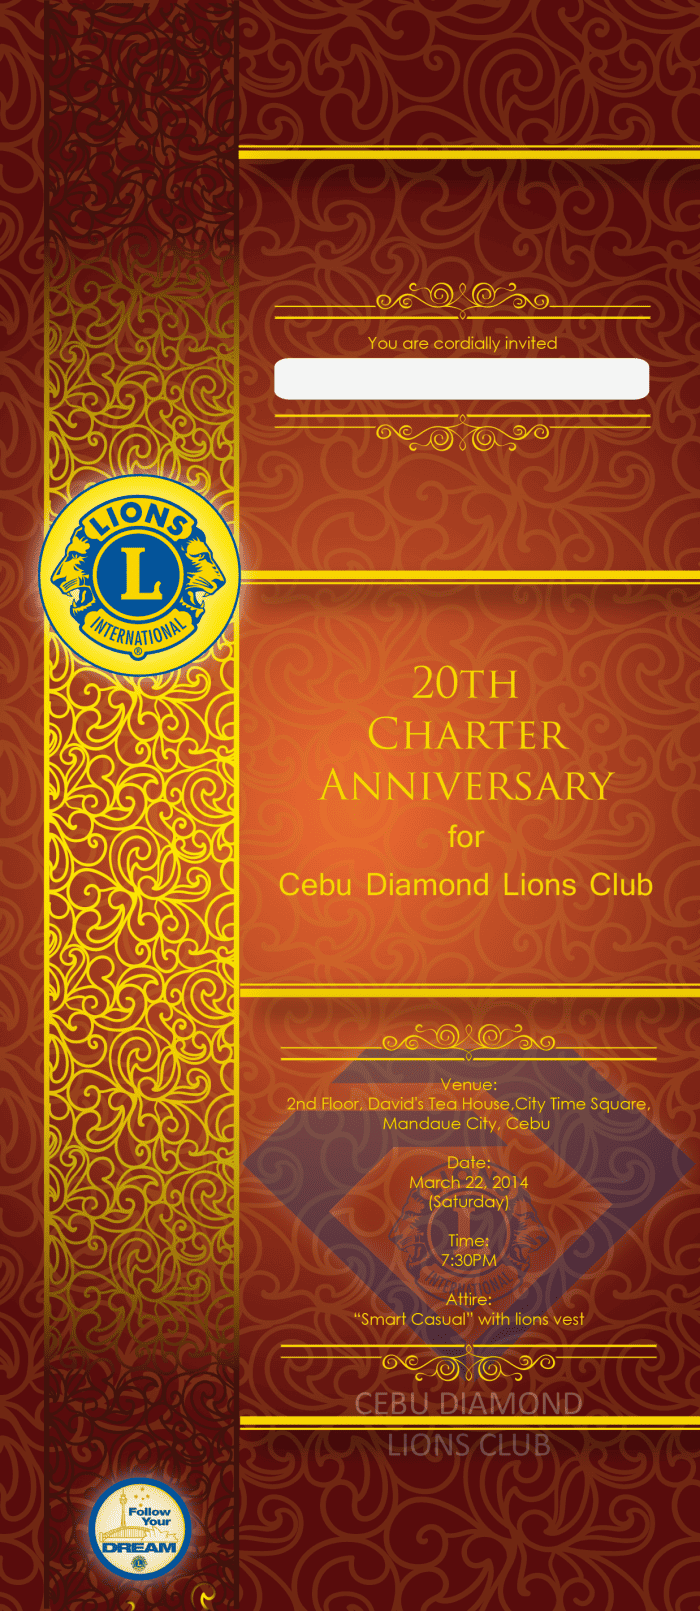 20th Charter Anniversary Cebu Diamonds Lions Club Invitation Card